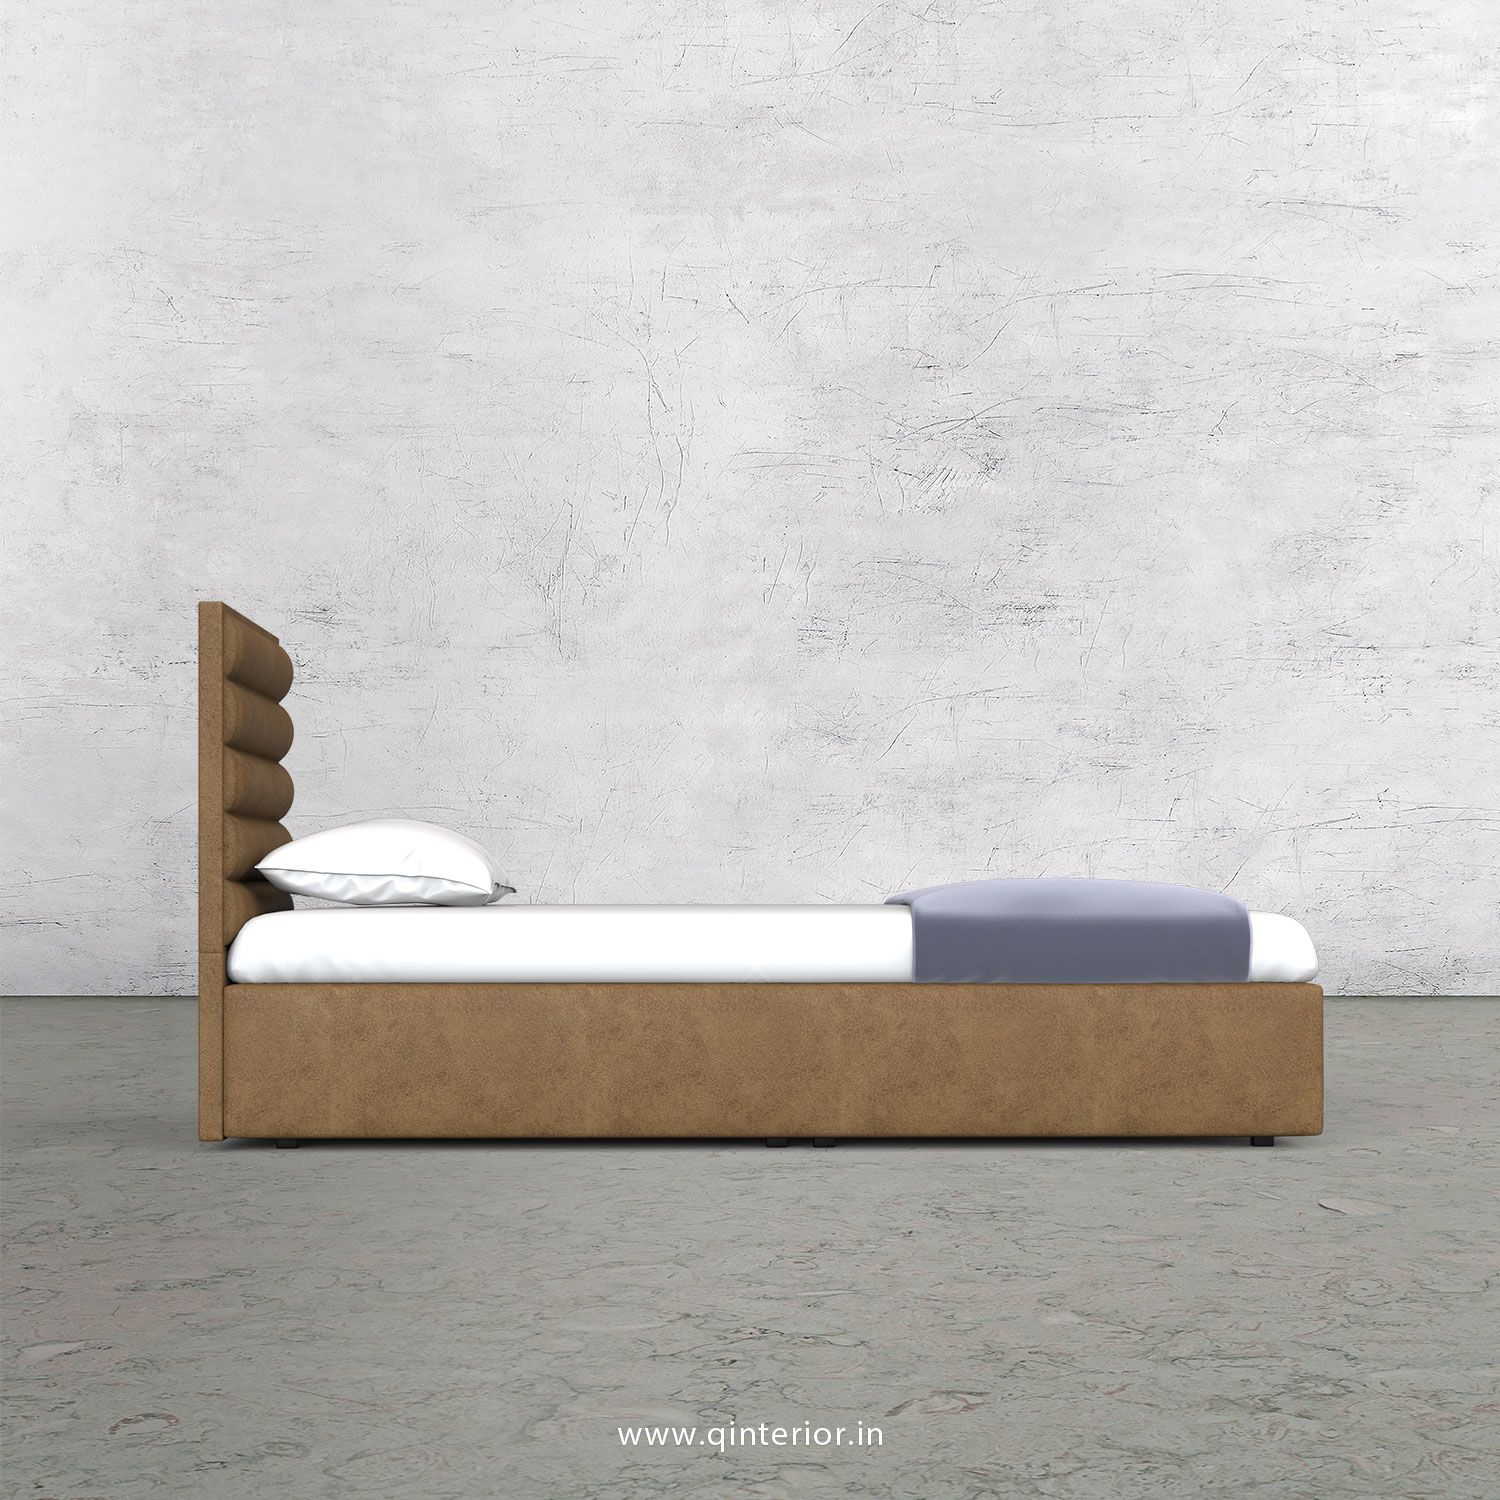 Crux Single Bed in Fab Leather Fabric - SBD009 FL02